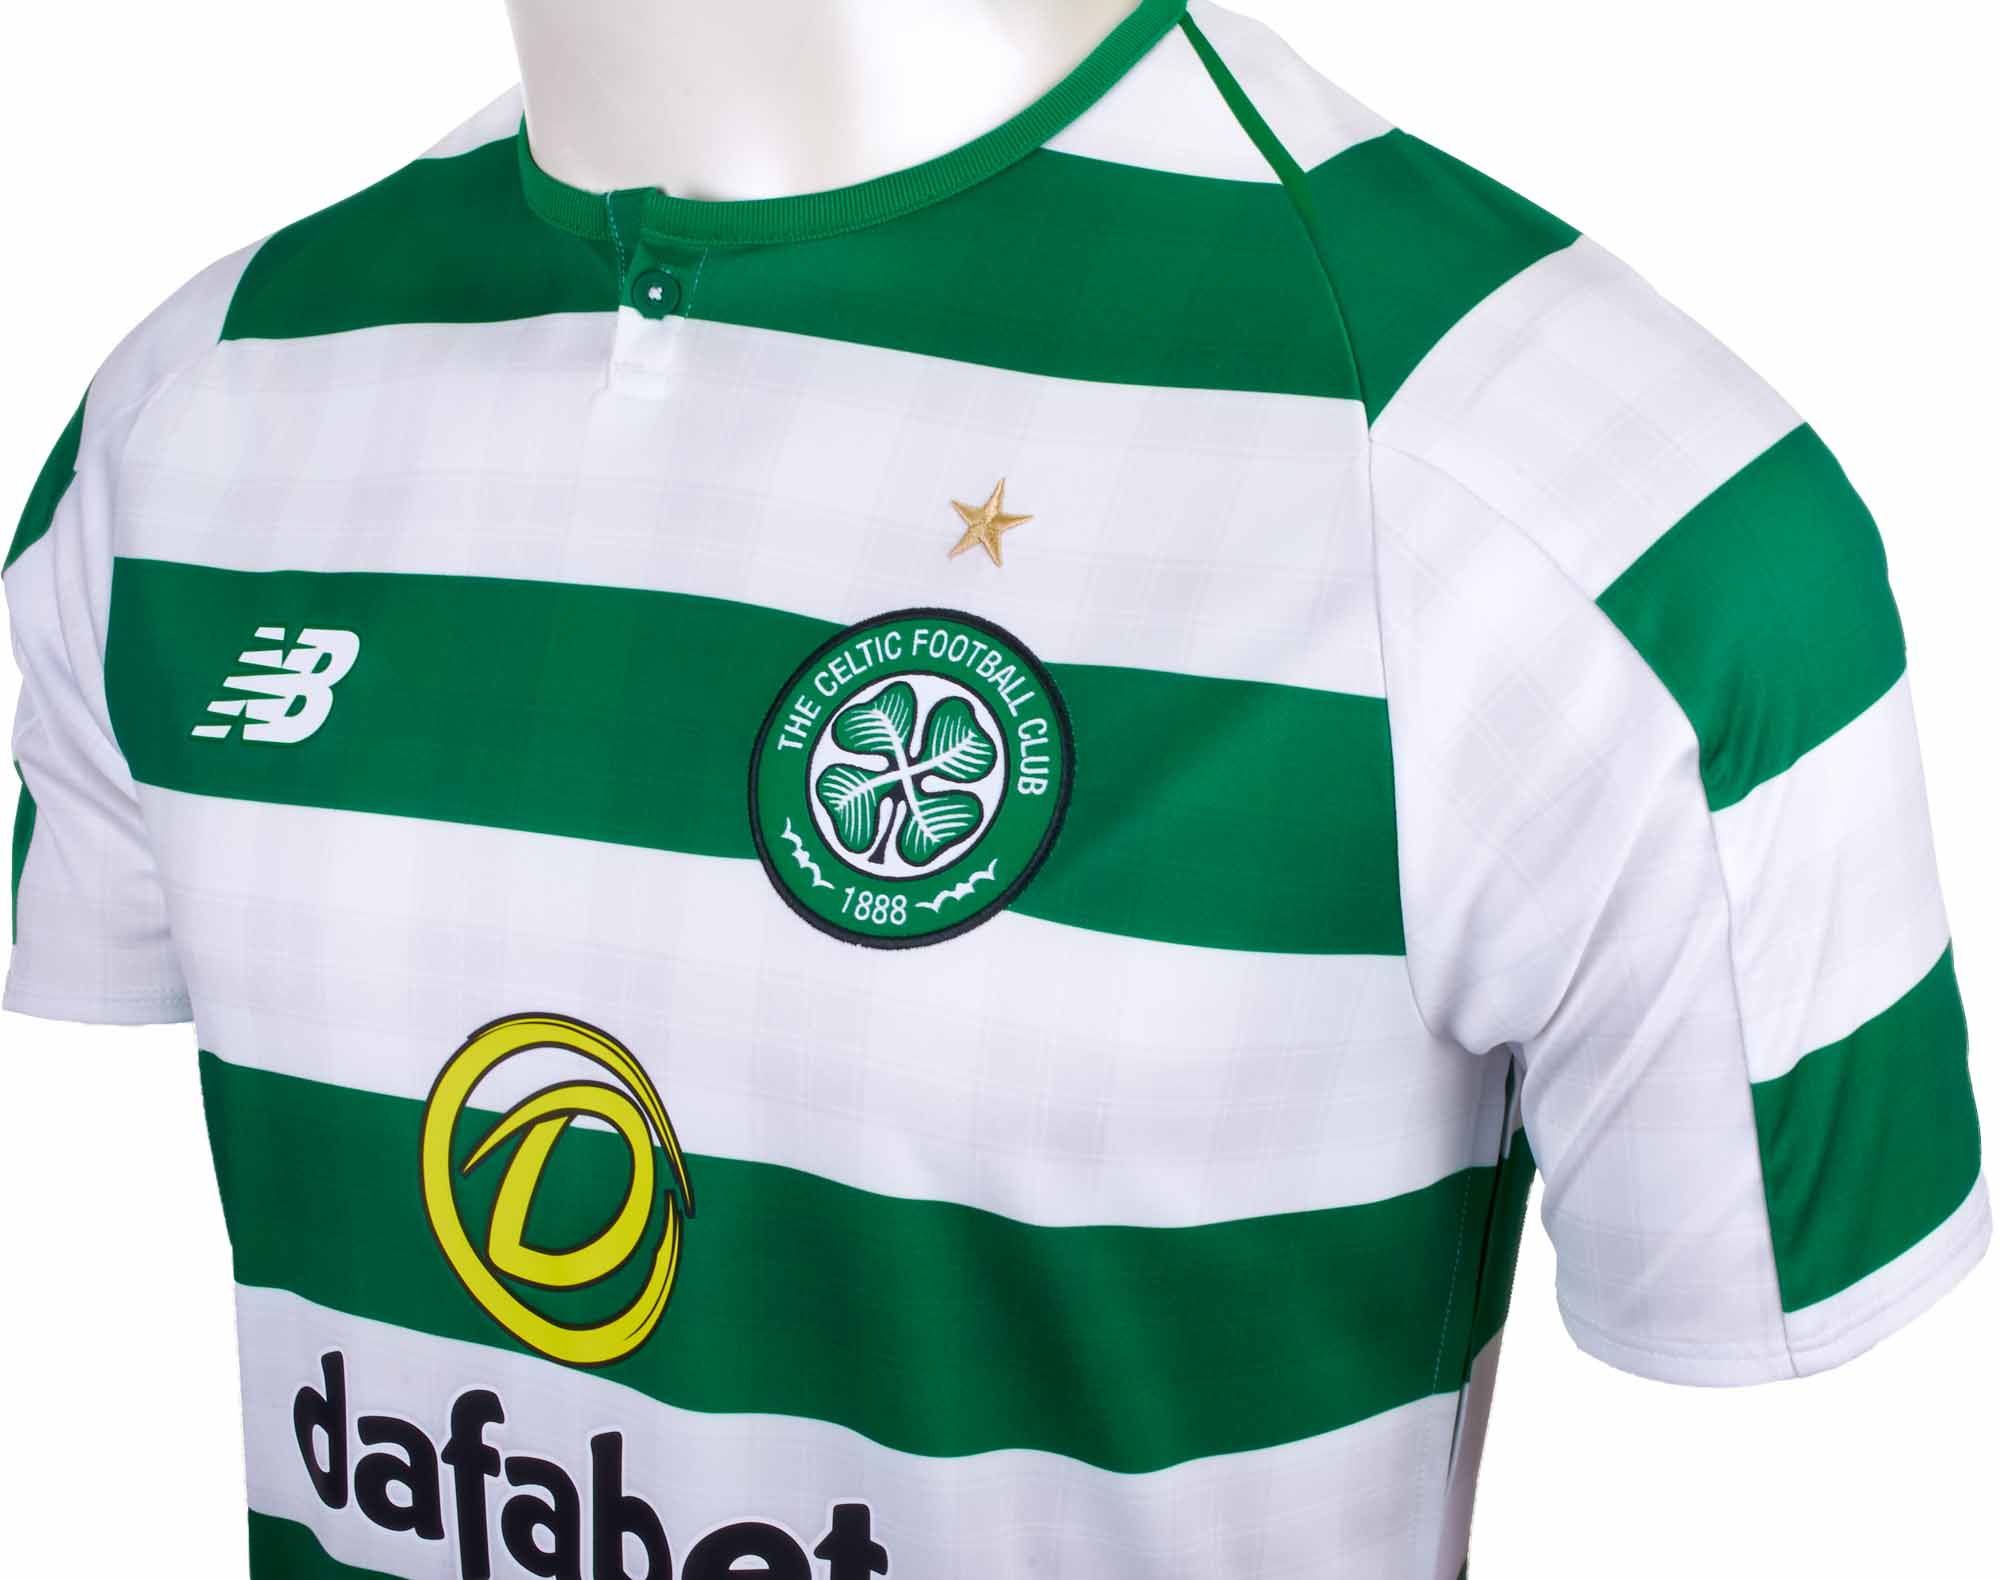 2019 / 2020 New Balance Celtic Third Kit Soccer jersey Shirt Football